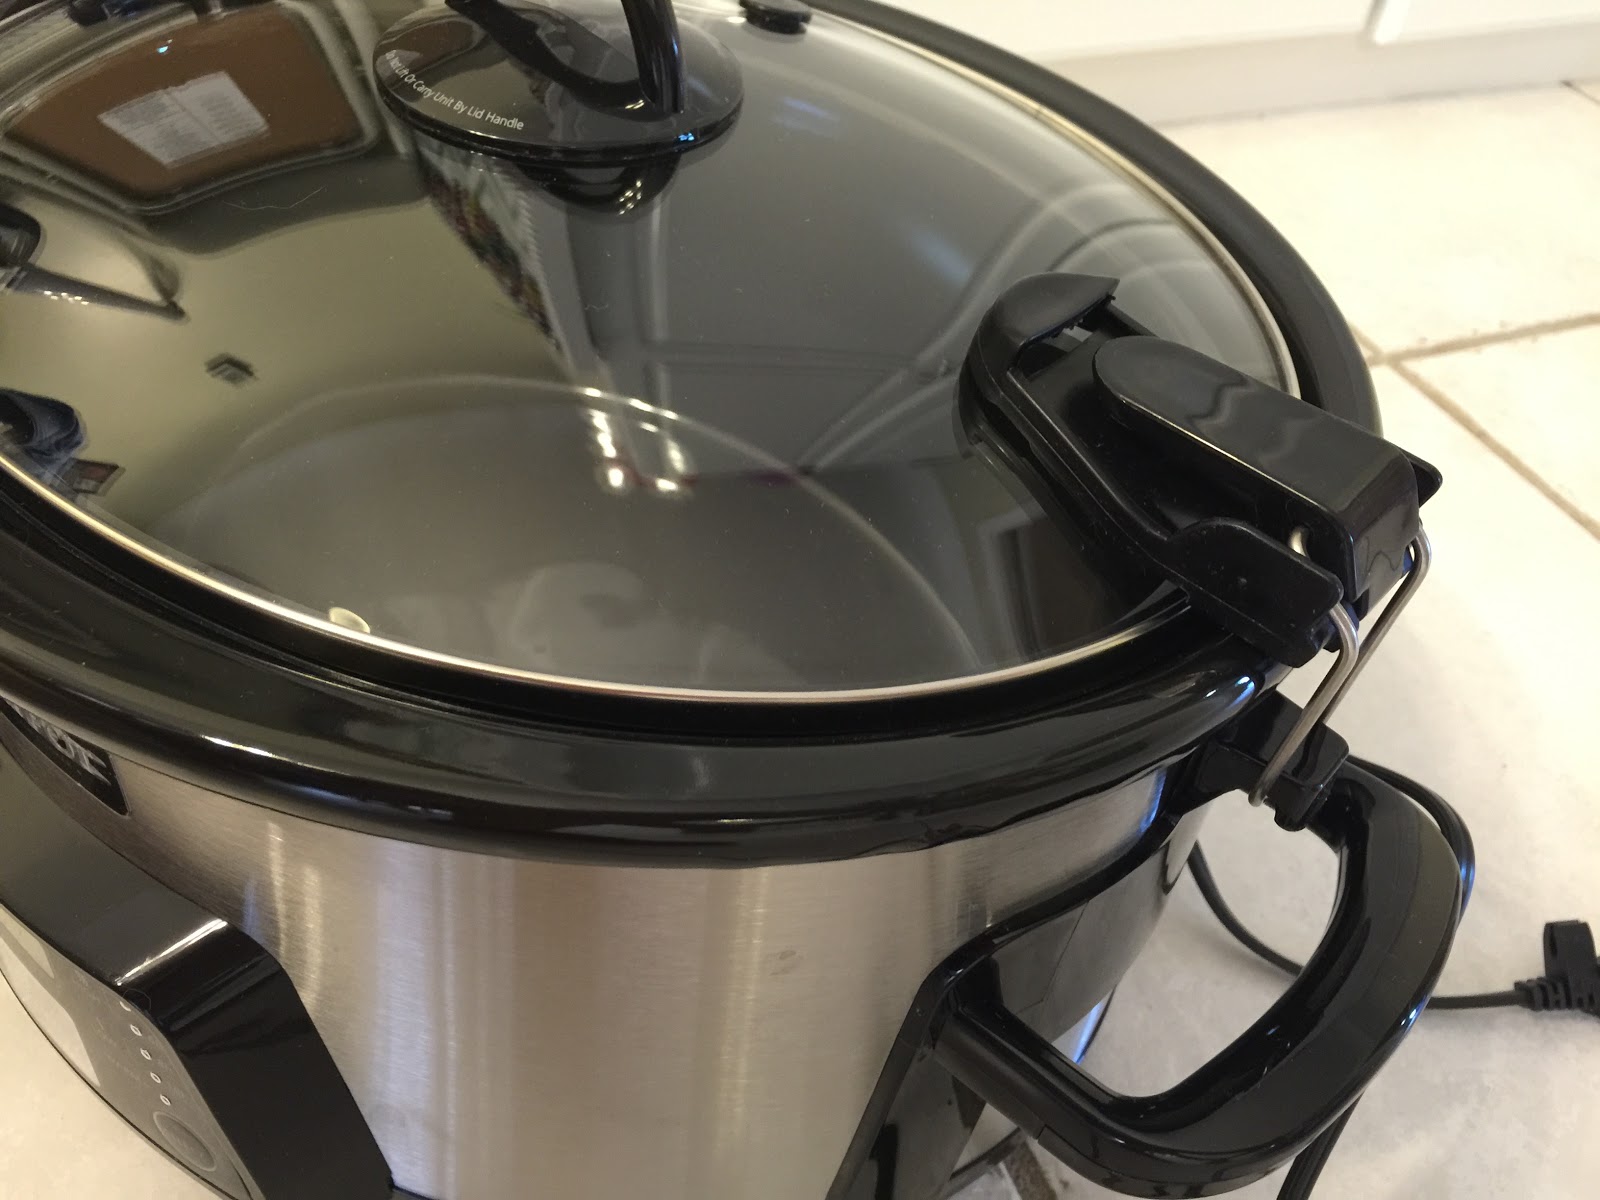 A Busy Mom's Slow Cooker Adventures: Crock-Pot® Savor Bundle #Review